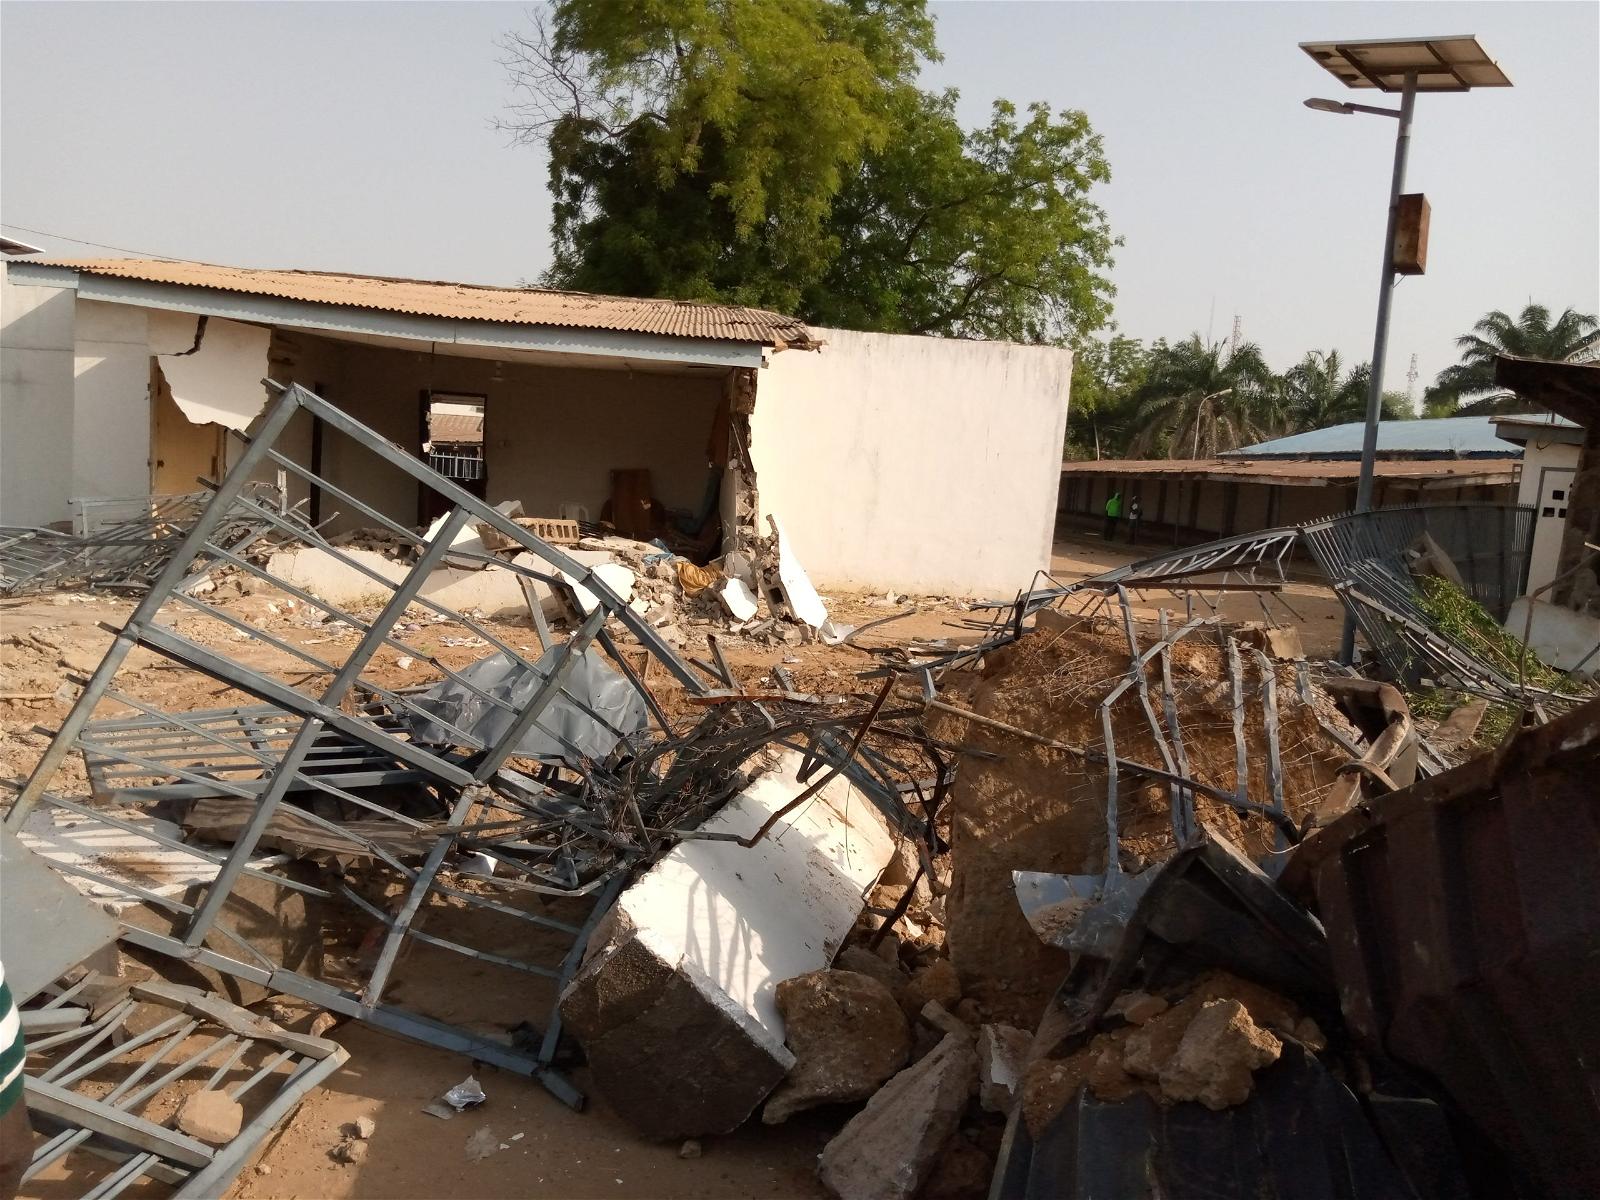 We did not demolish, attack old people’s home – Kwara Govt